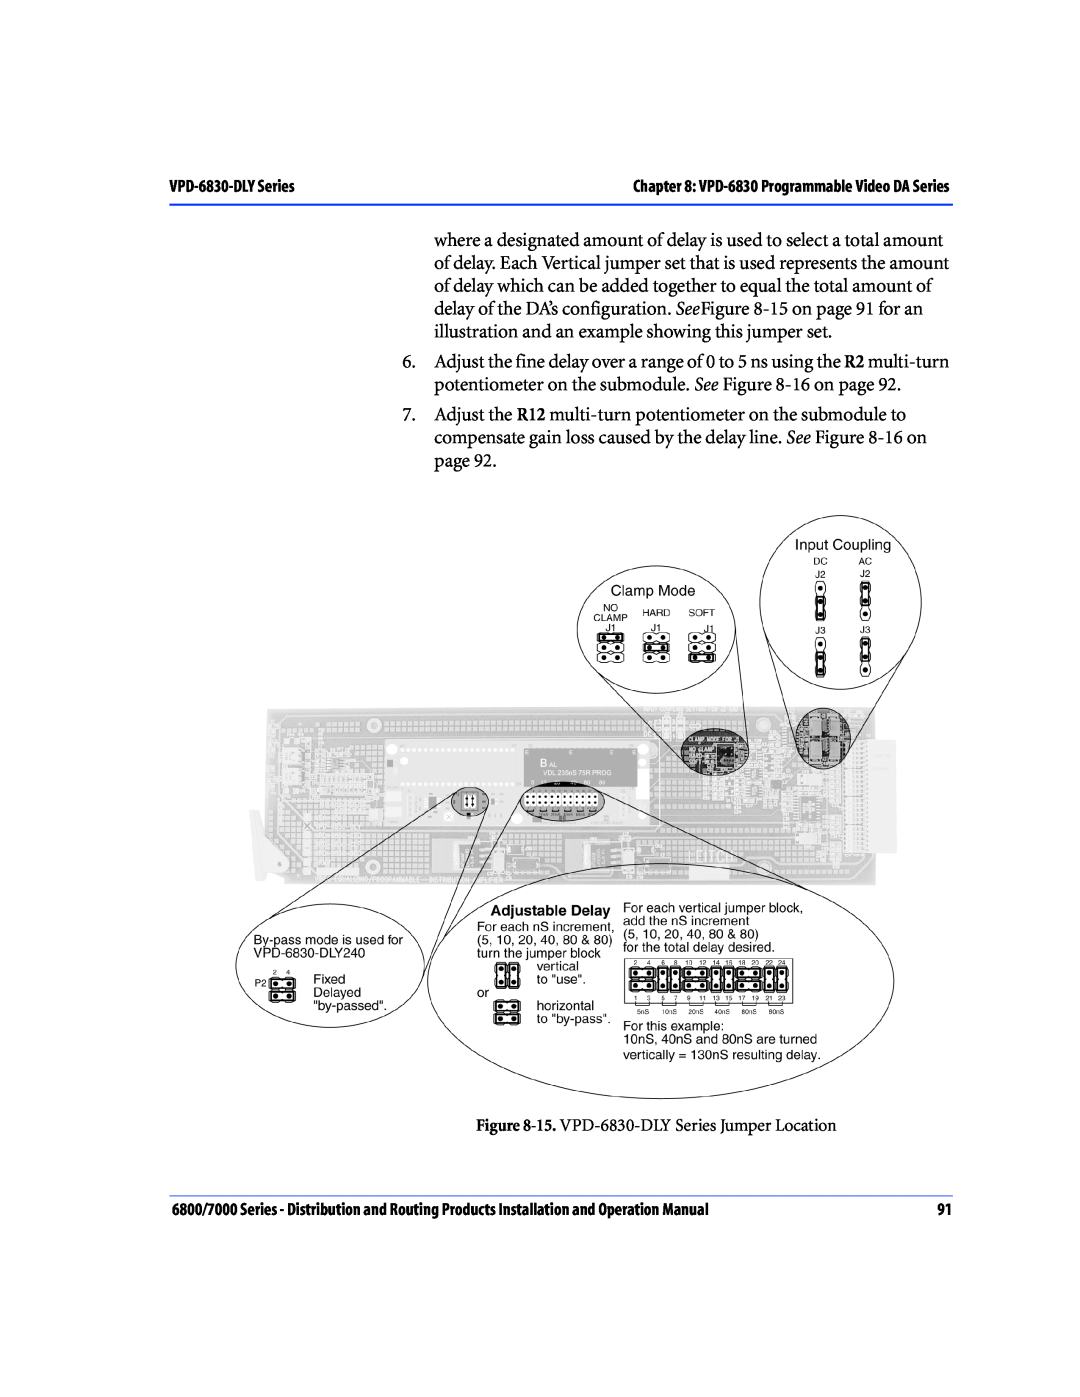 Nokia 6800 Series, 7000 Series operation manual 15. VPD-6830-DLY Series Jumper Location 